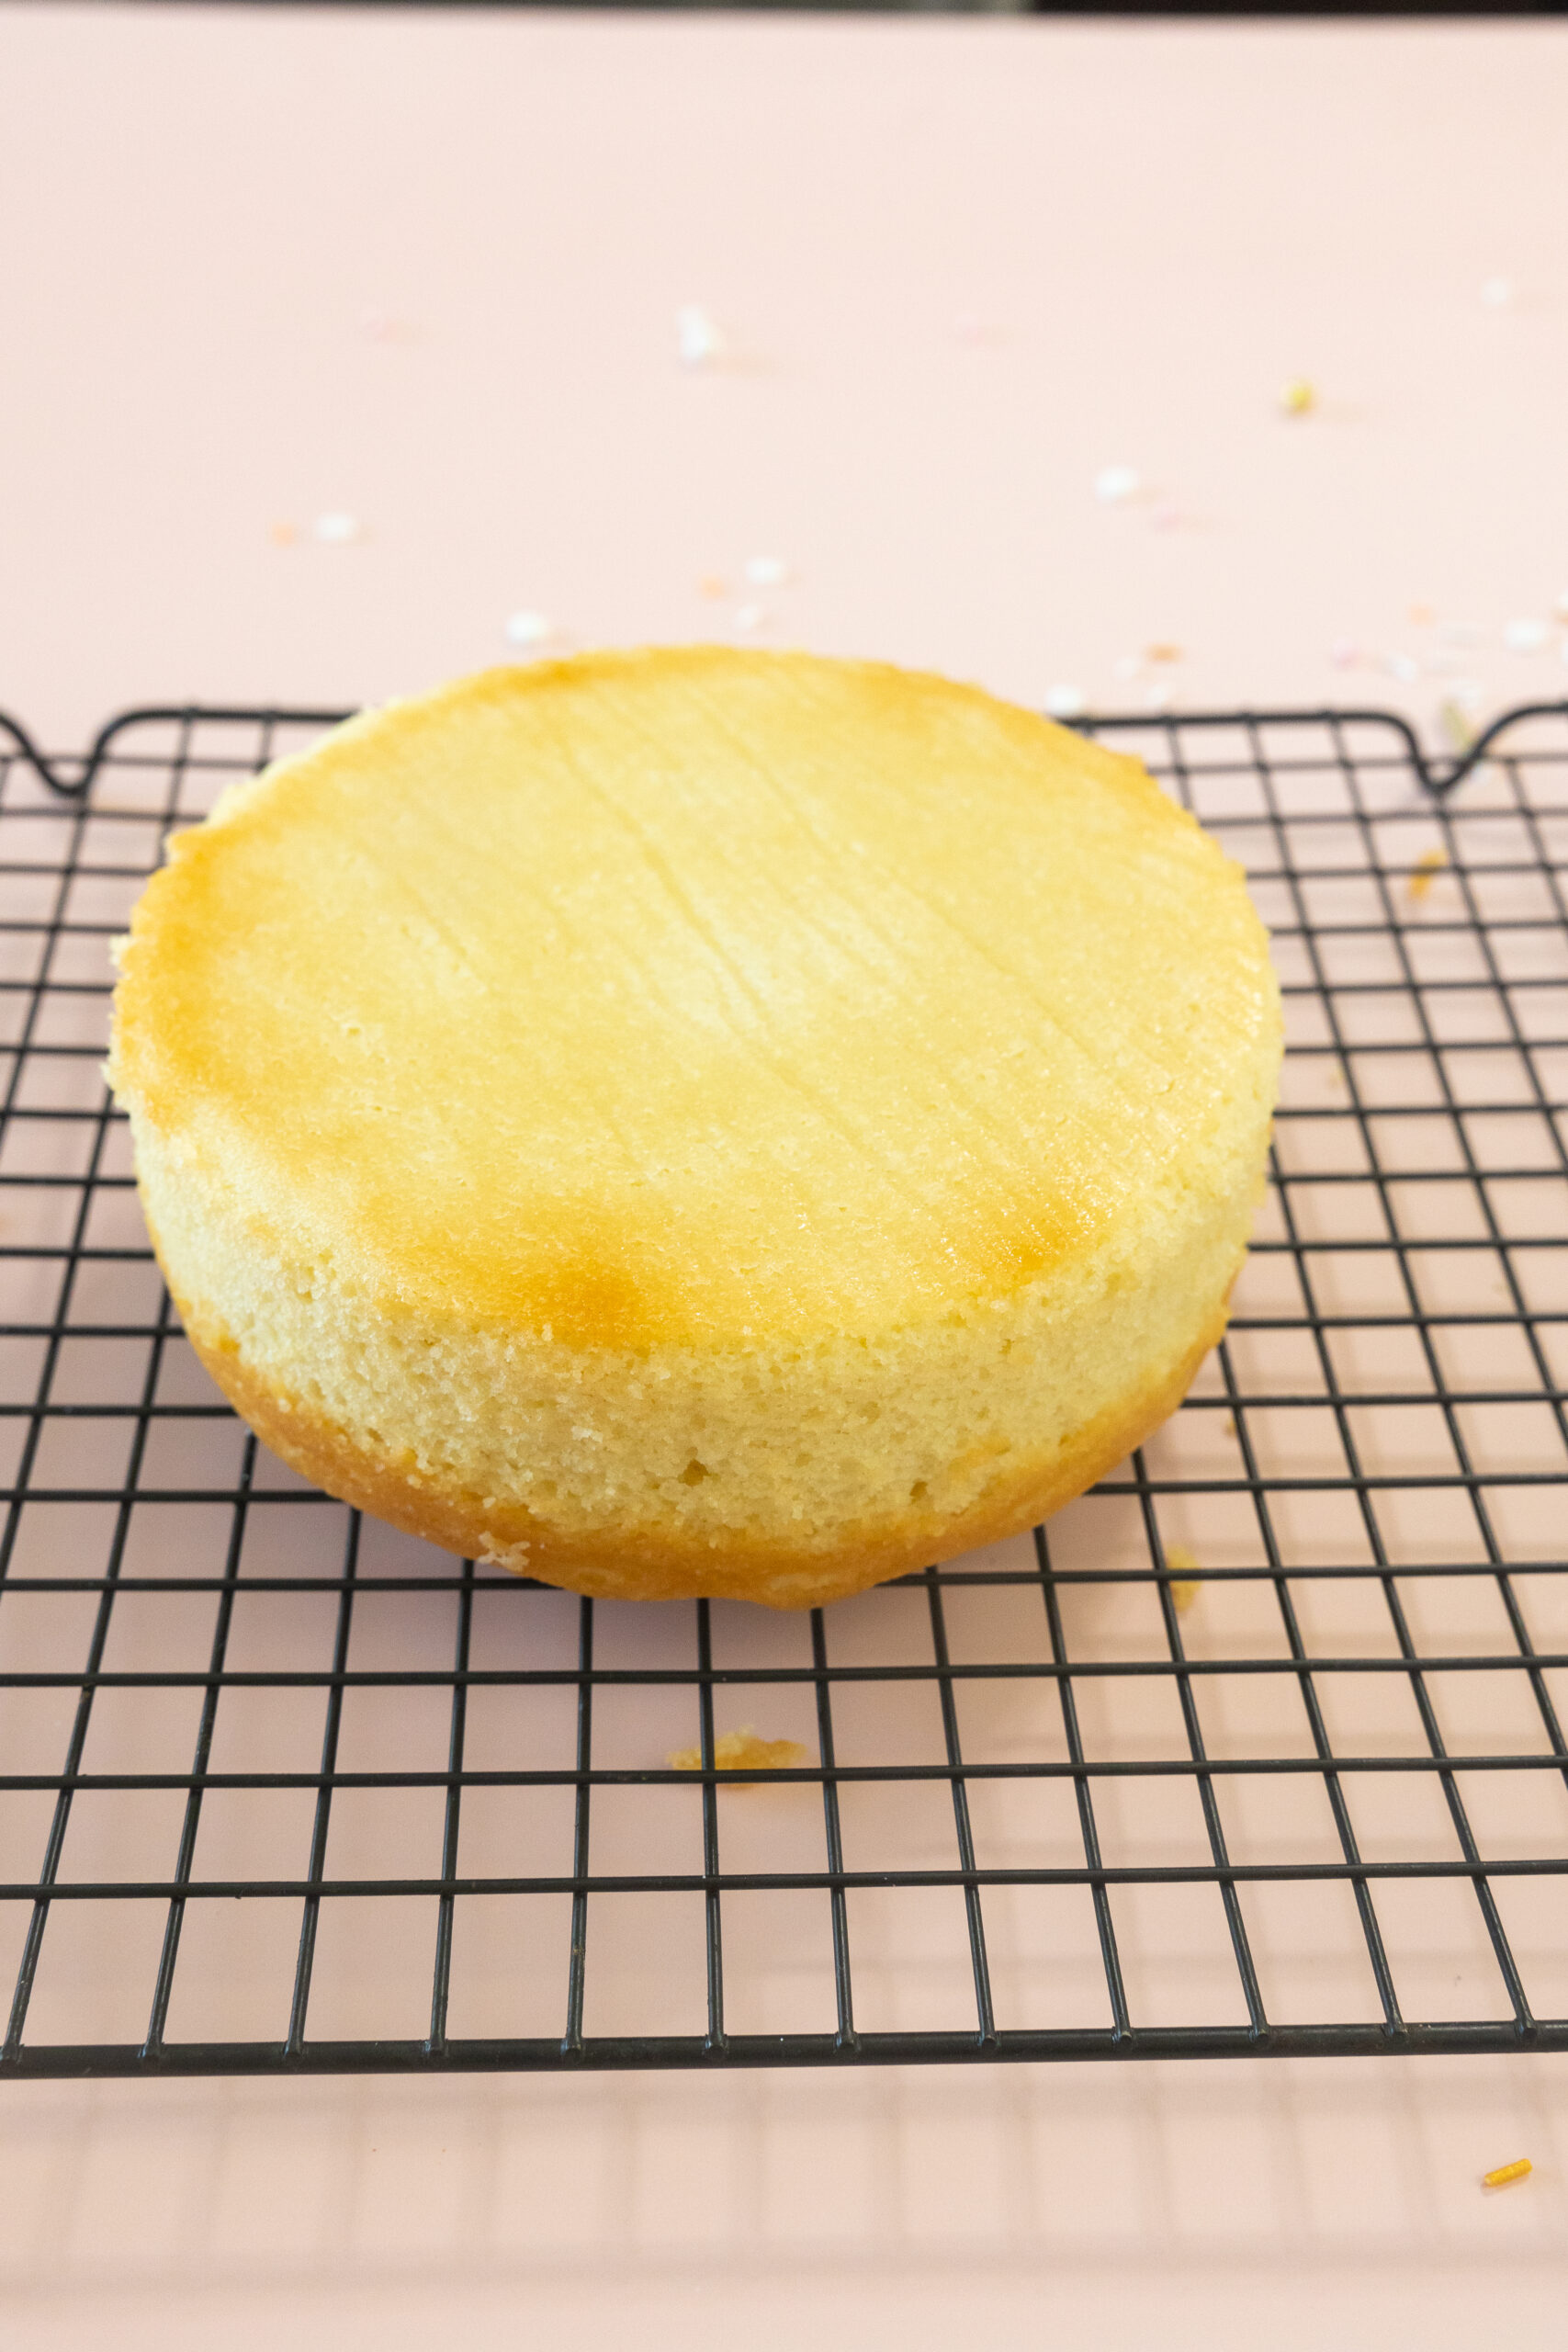 Most Delicious Bento Cake Recipe - Bakingo Blog